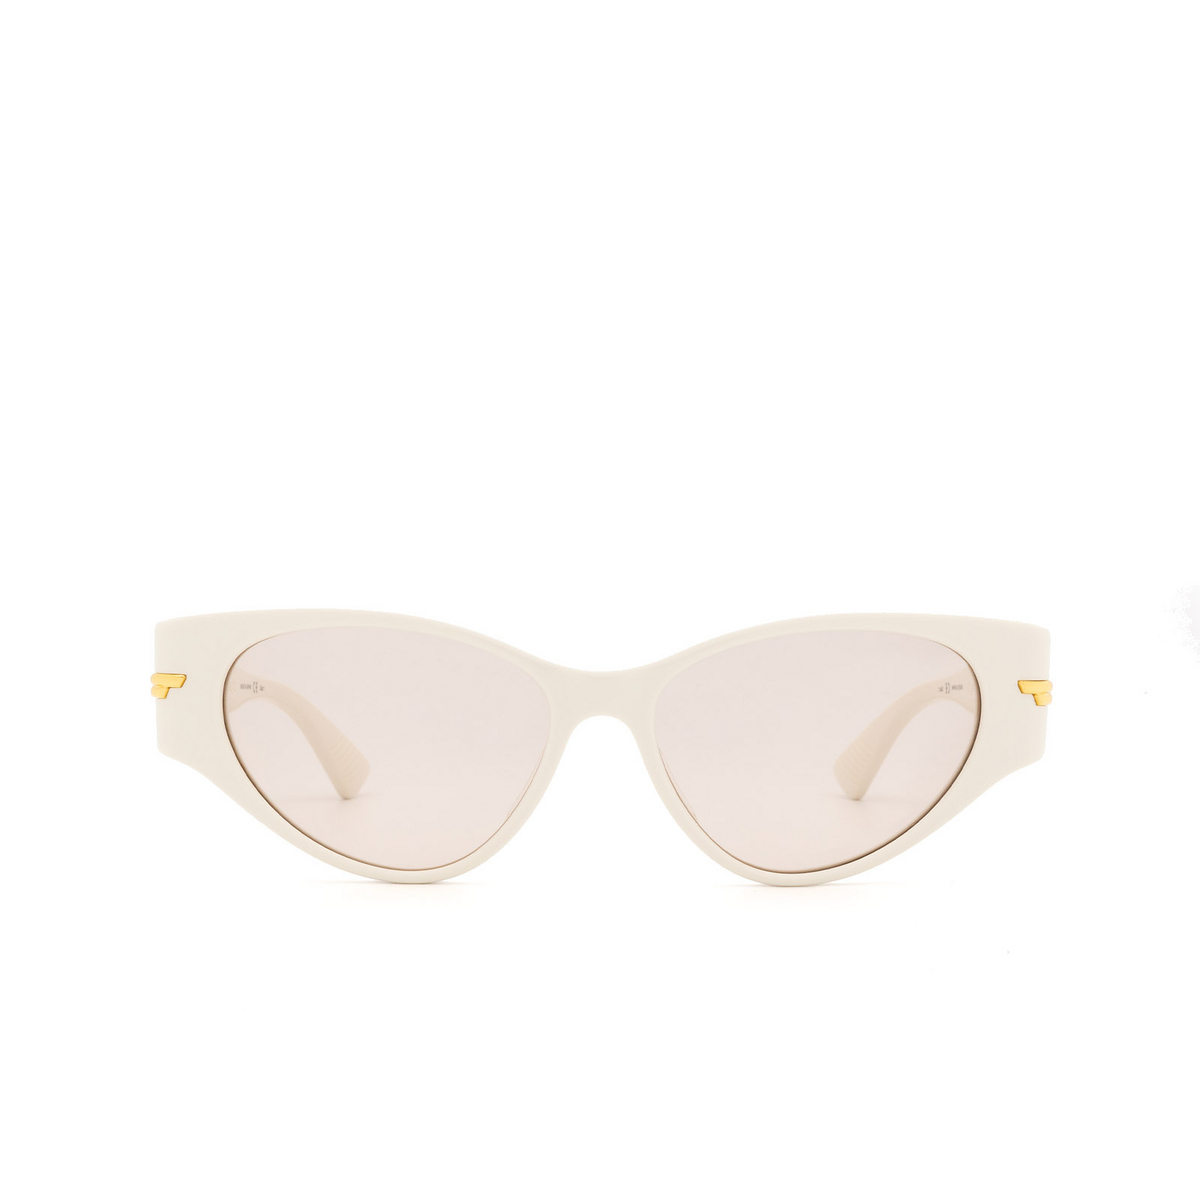 Bottega Veneta® Sunglasses: BV1002S color Ivory 004 - front view.